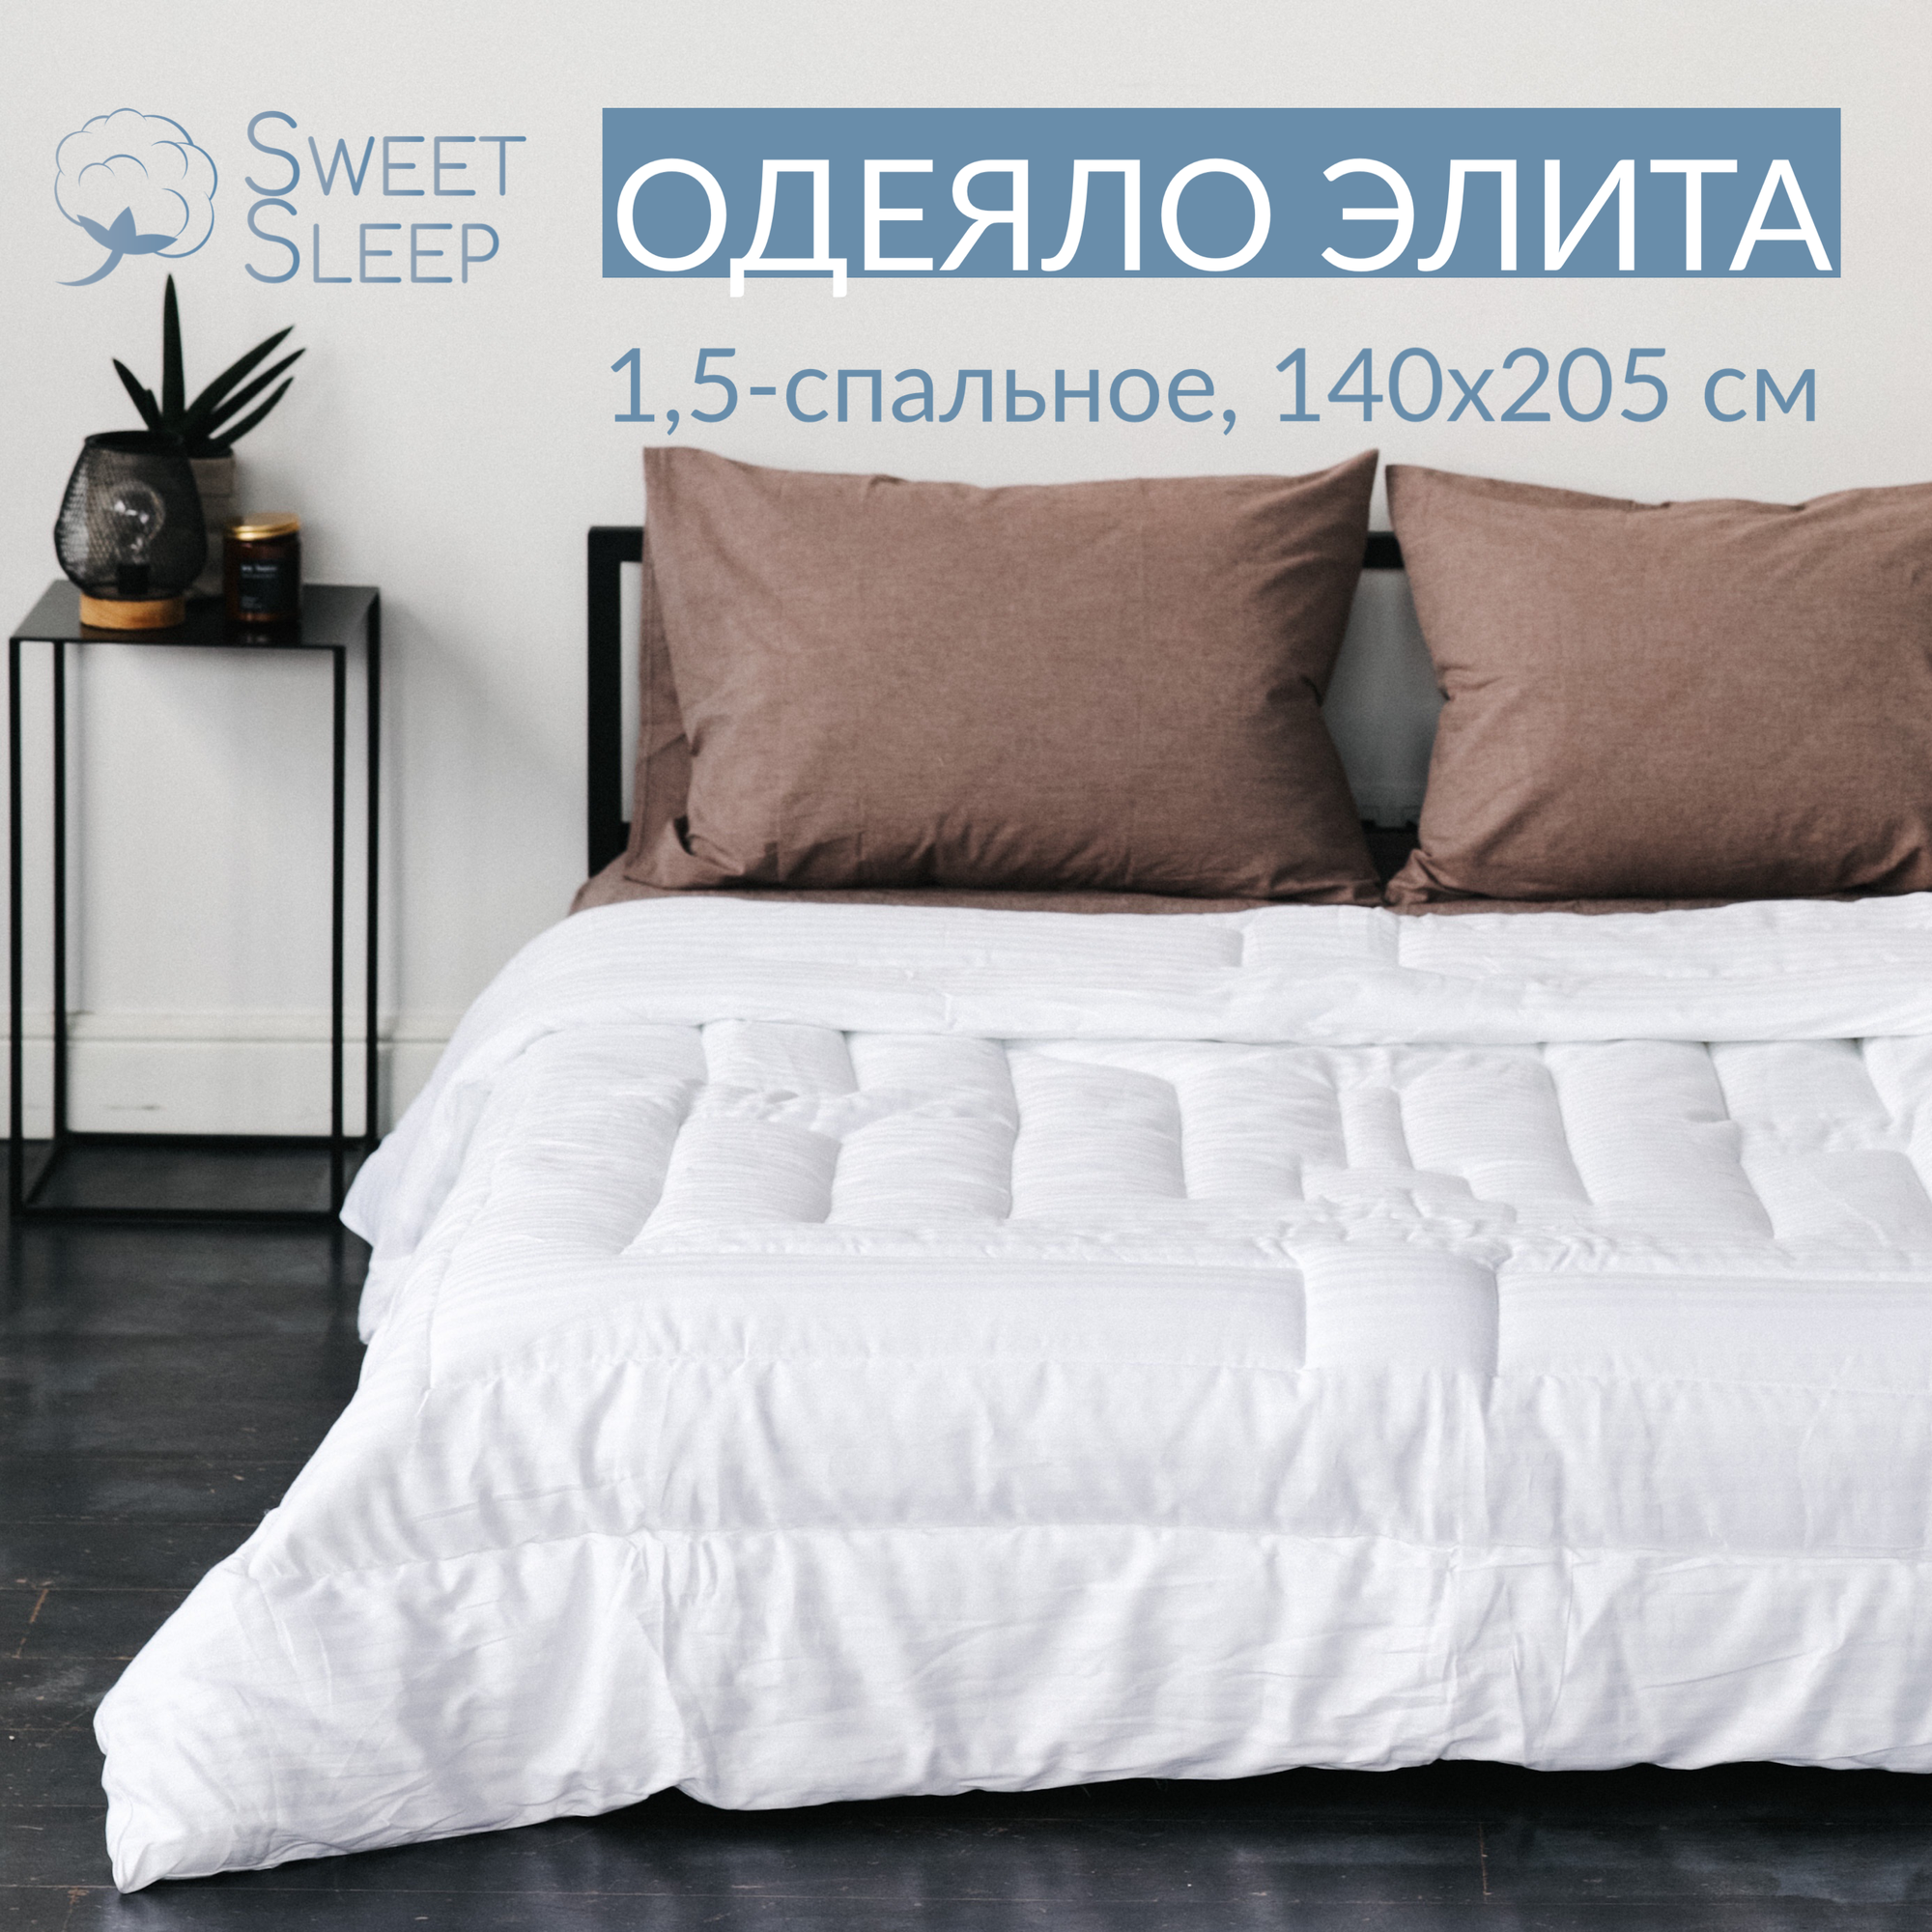 Одеяло Sweet Sleep "Элита" лебяжий пух 140*205 см